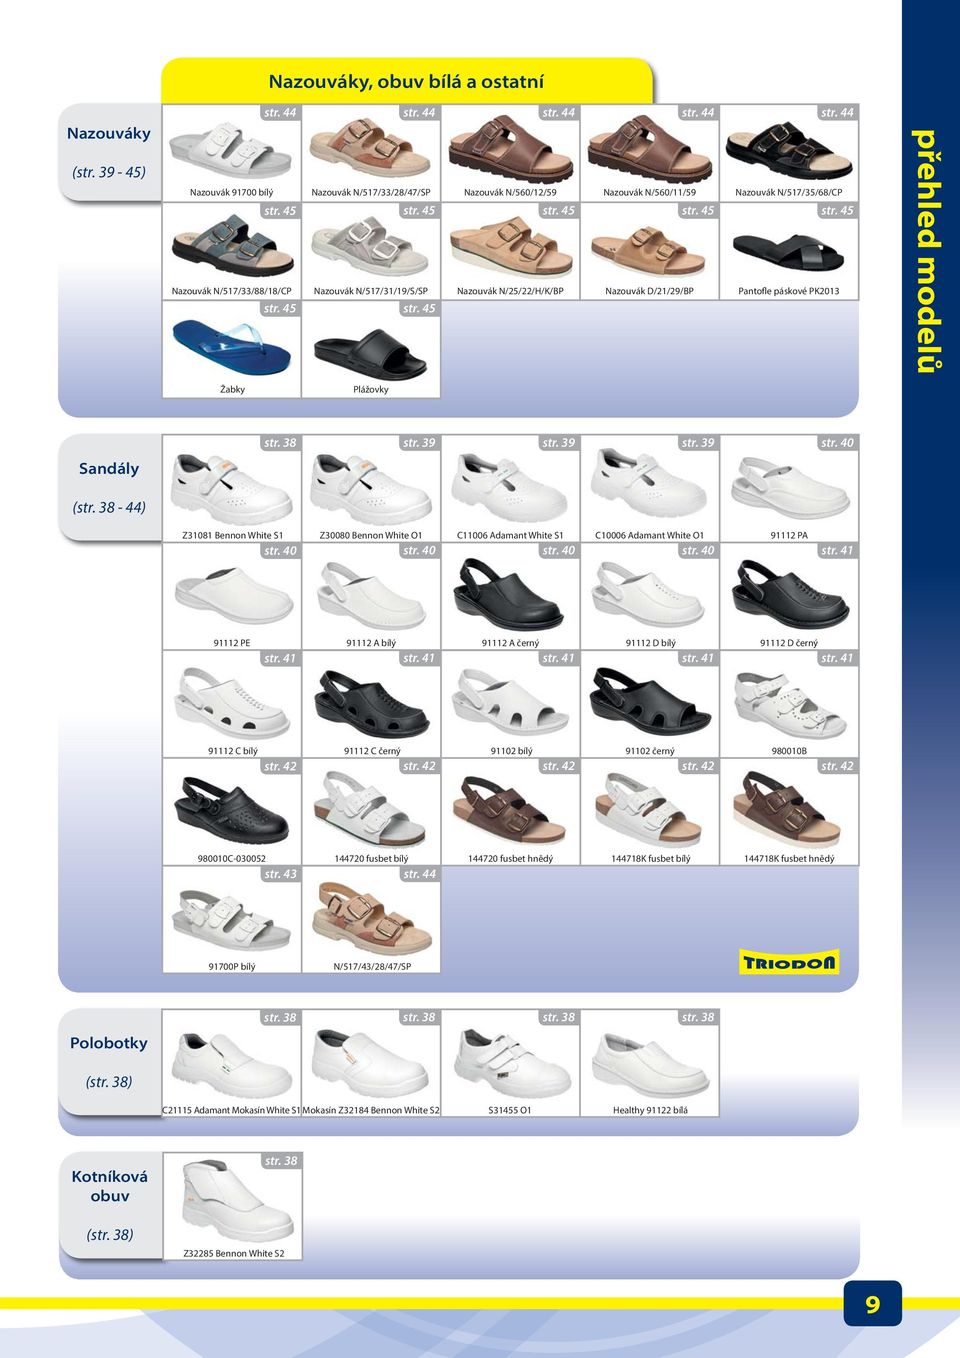 45 Pantofle páskové PK2013 přehled modelů Žabky Plážovky str. 38 str. 39 str. 39 str. 39 str. 40 Sandály (str.